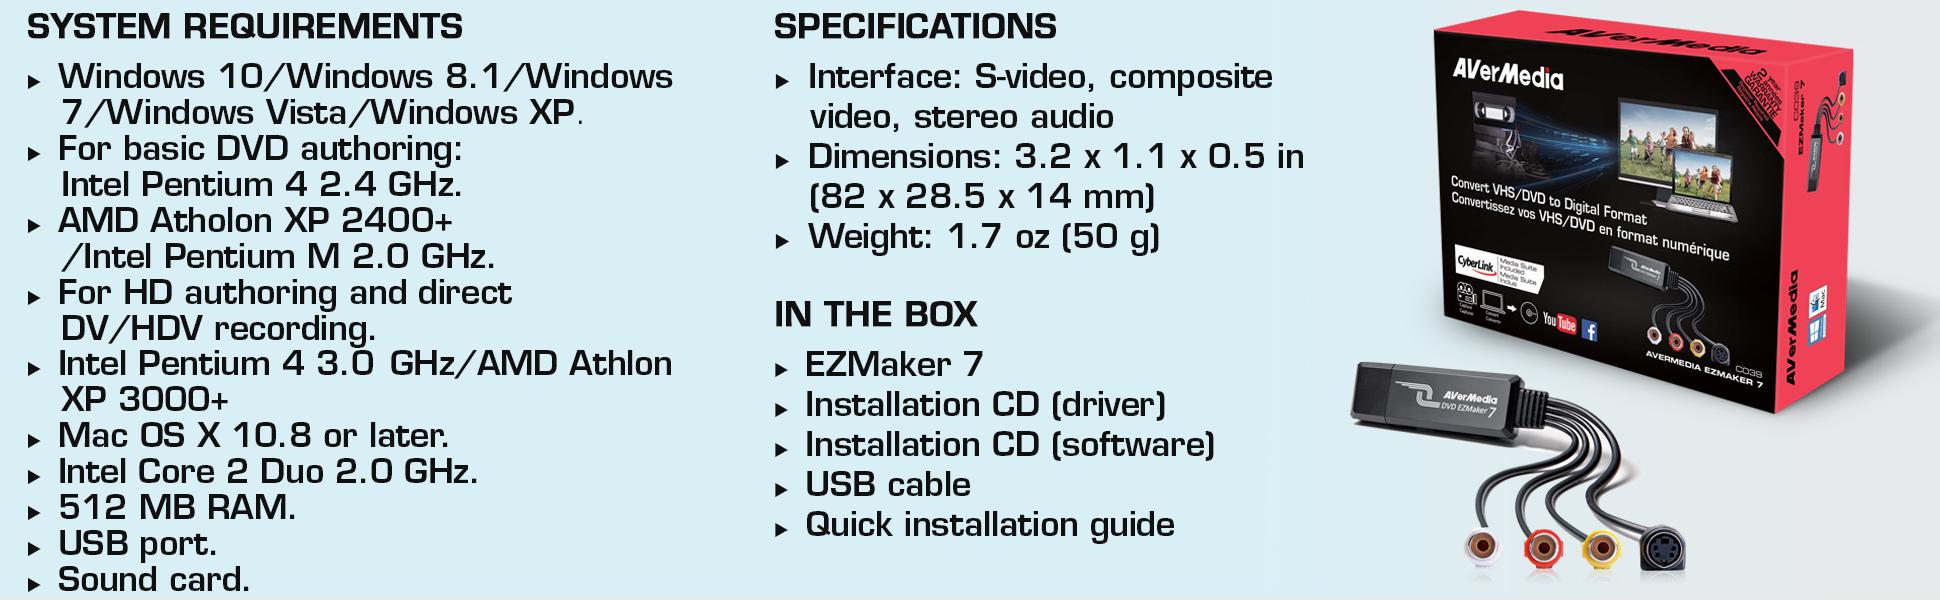 AVerMedia DVD EZMaker 7 - Analog Video to Digital DVD/VCD | Canada  Computers & Electronics